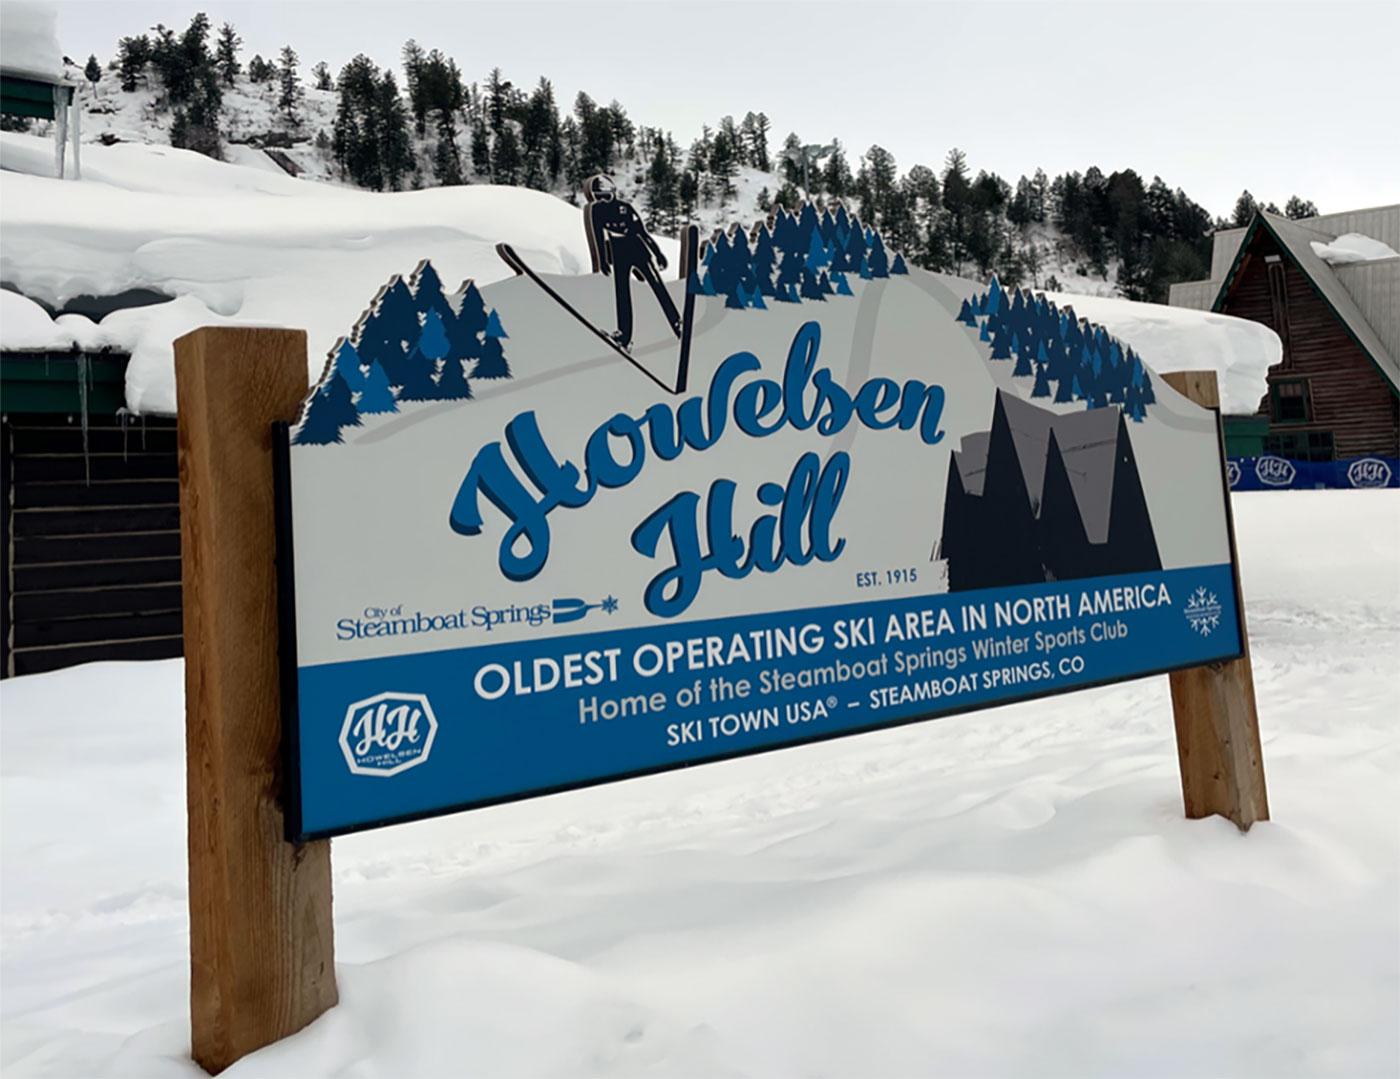 Howelsen Hill Ski Area  Steamboat Springs, CO - Official Website